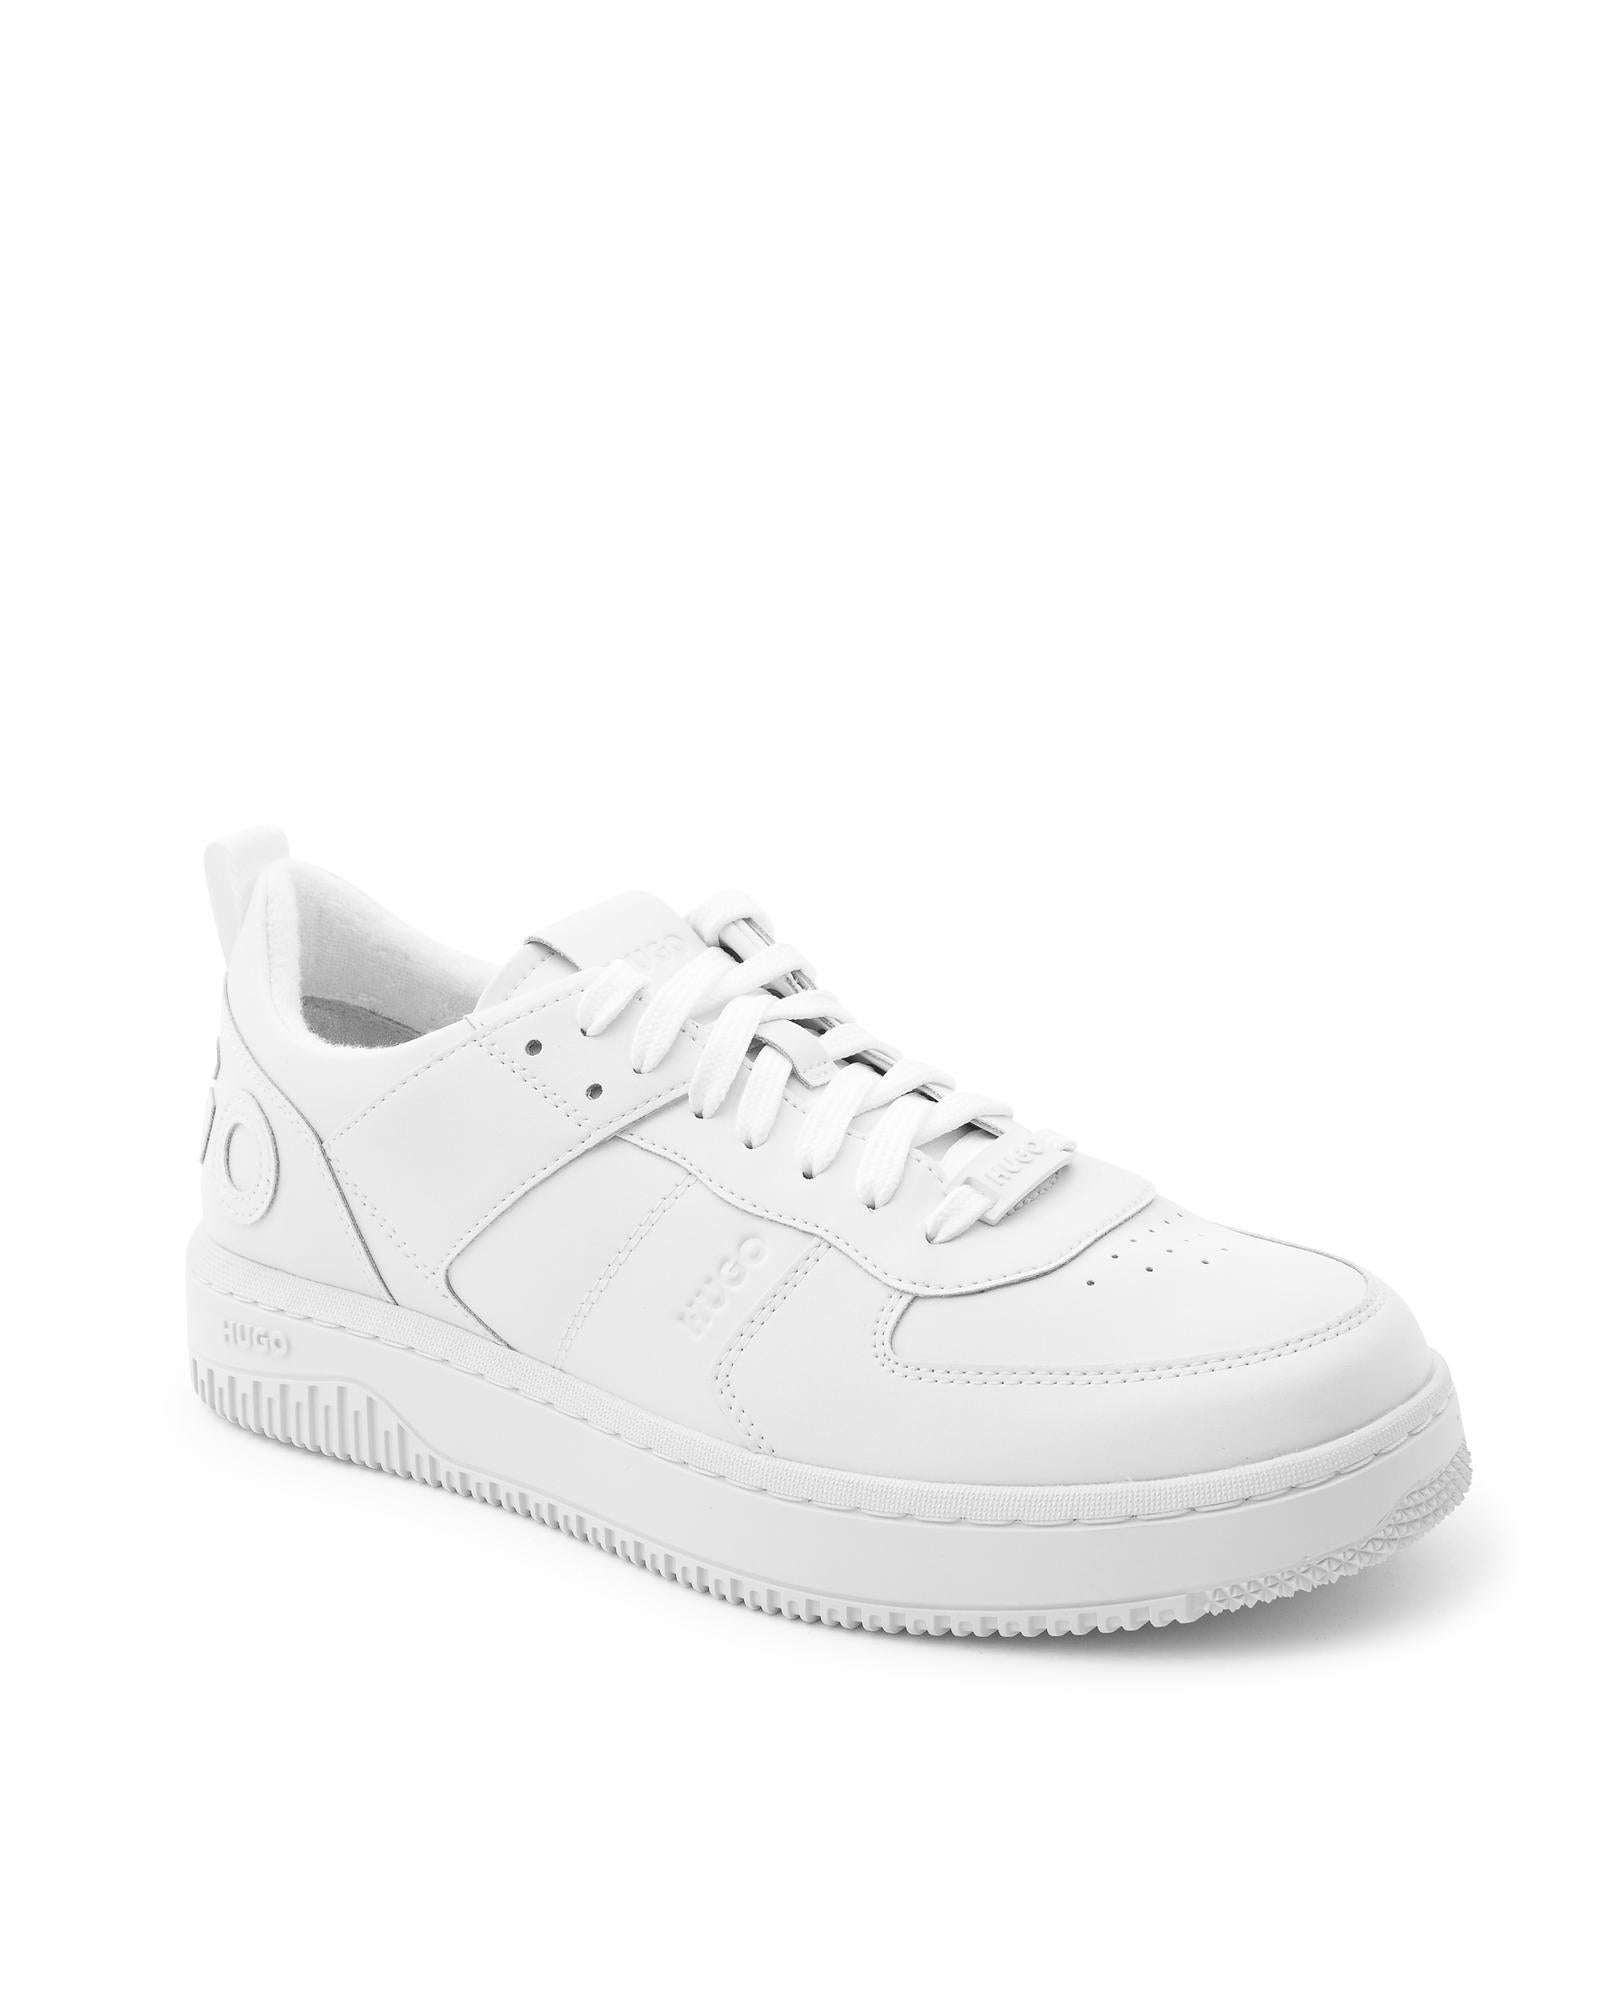 Men's Calfskin Rubber Sole Sneakers in White - 41 EU